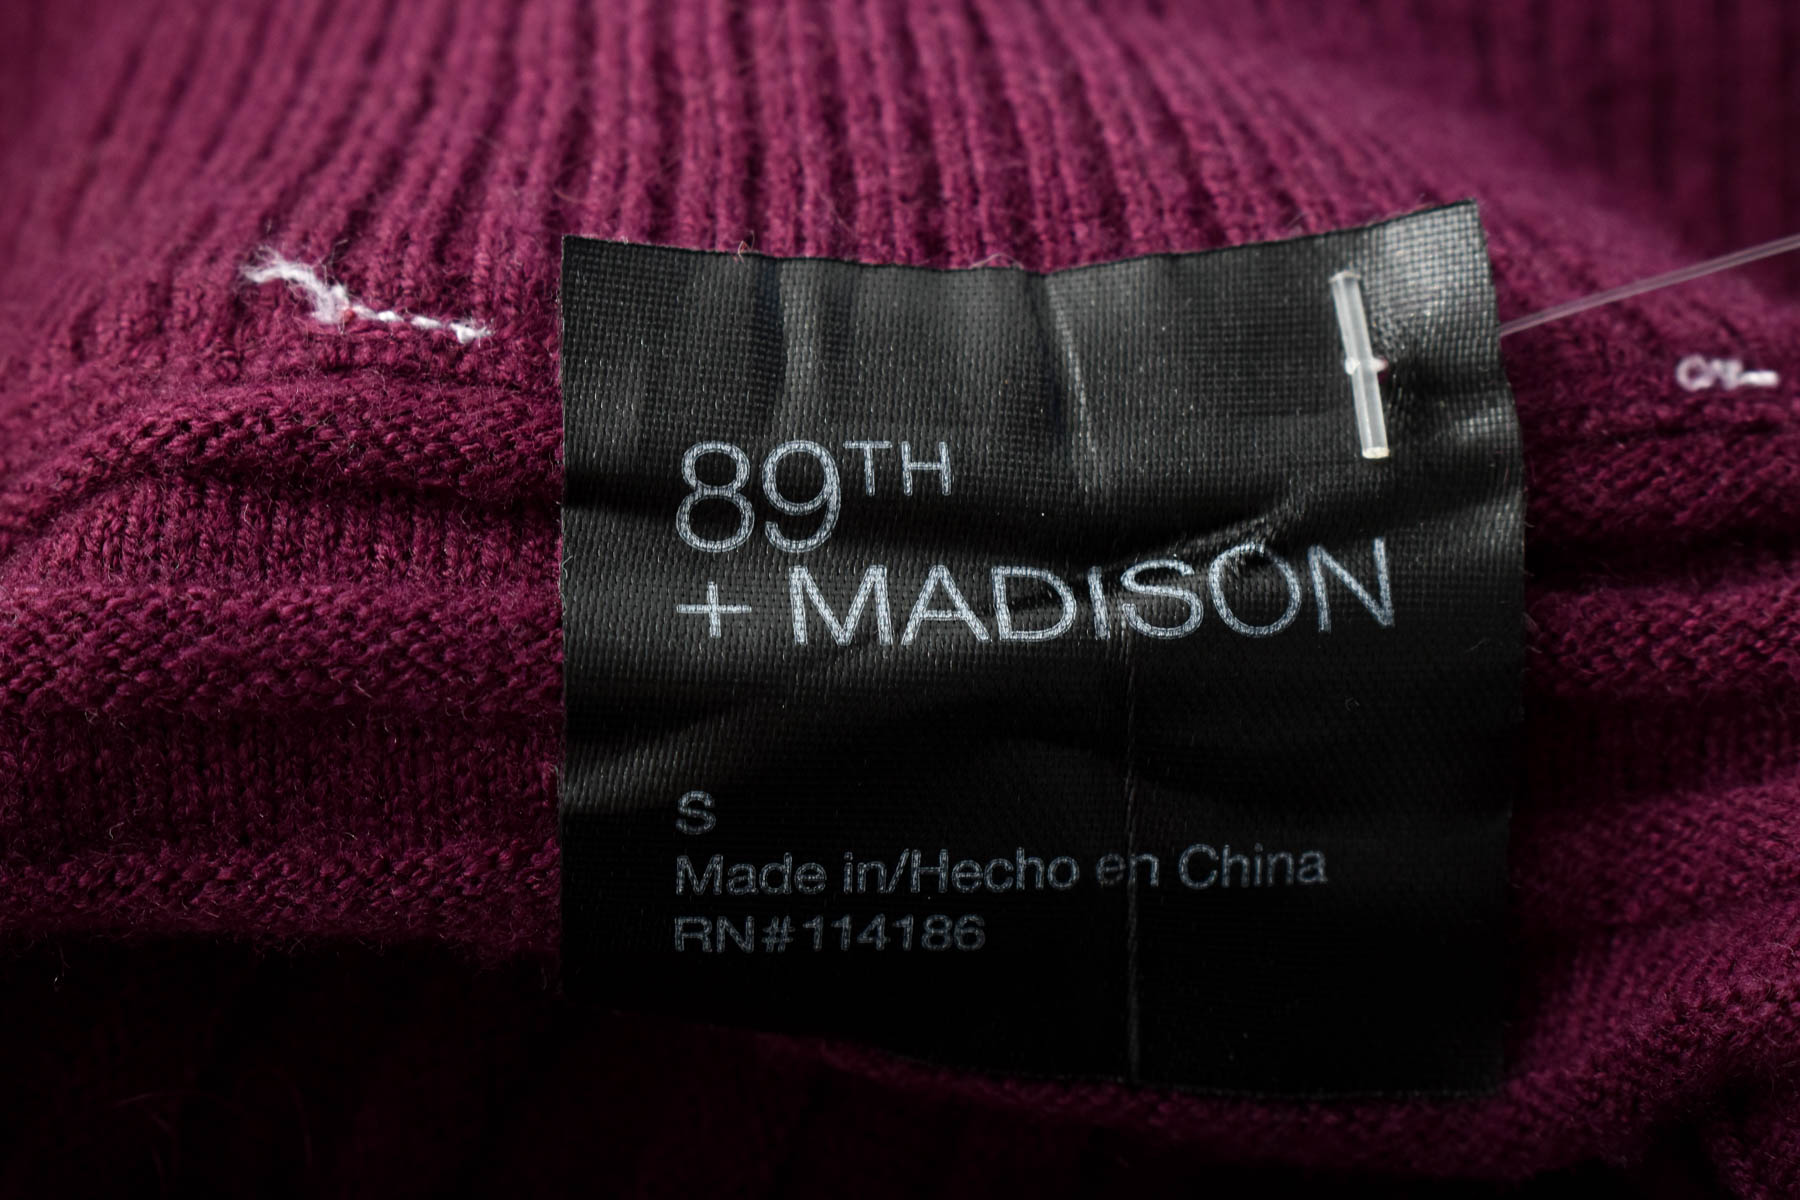 Дамски пуловер - 89th & MADISON - 2